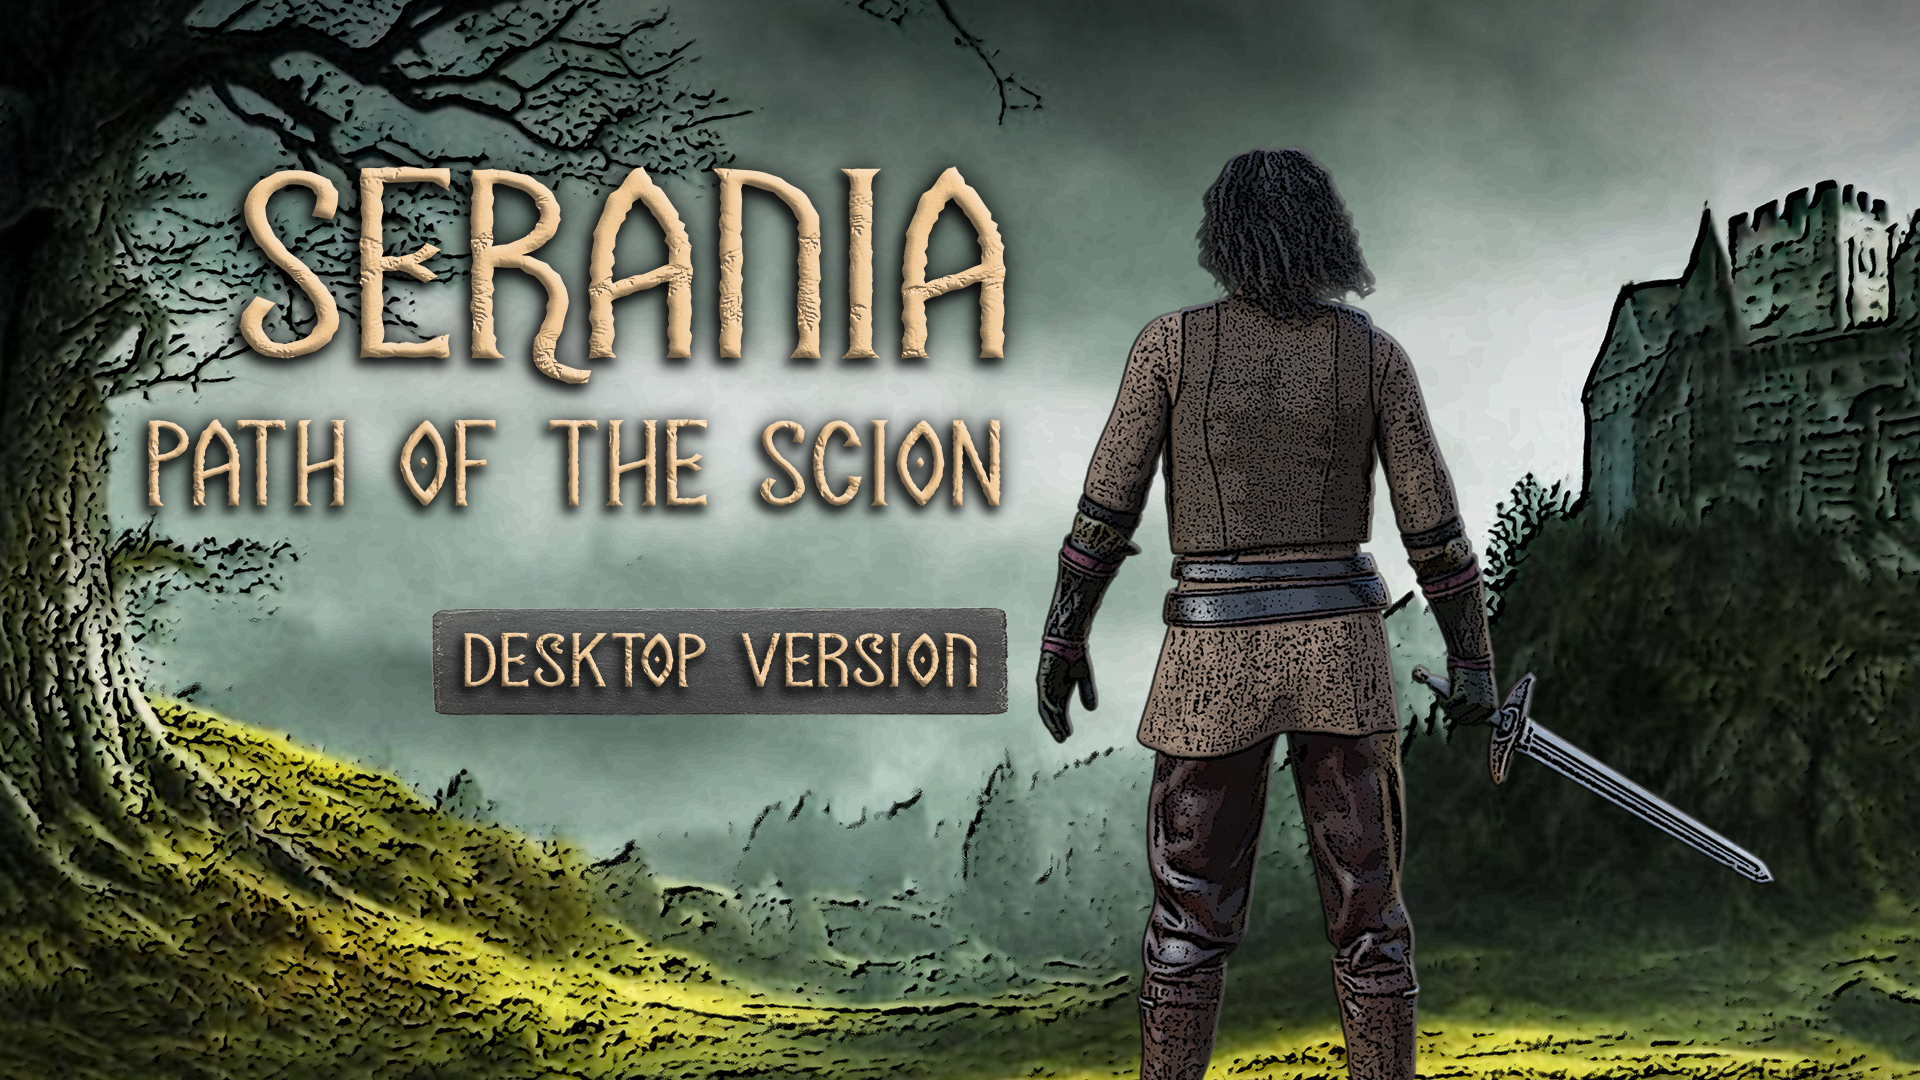 Serania - Path of the Scion, desktop version